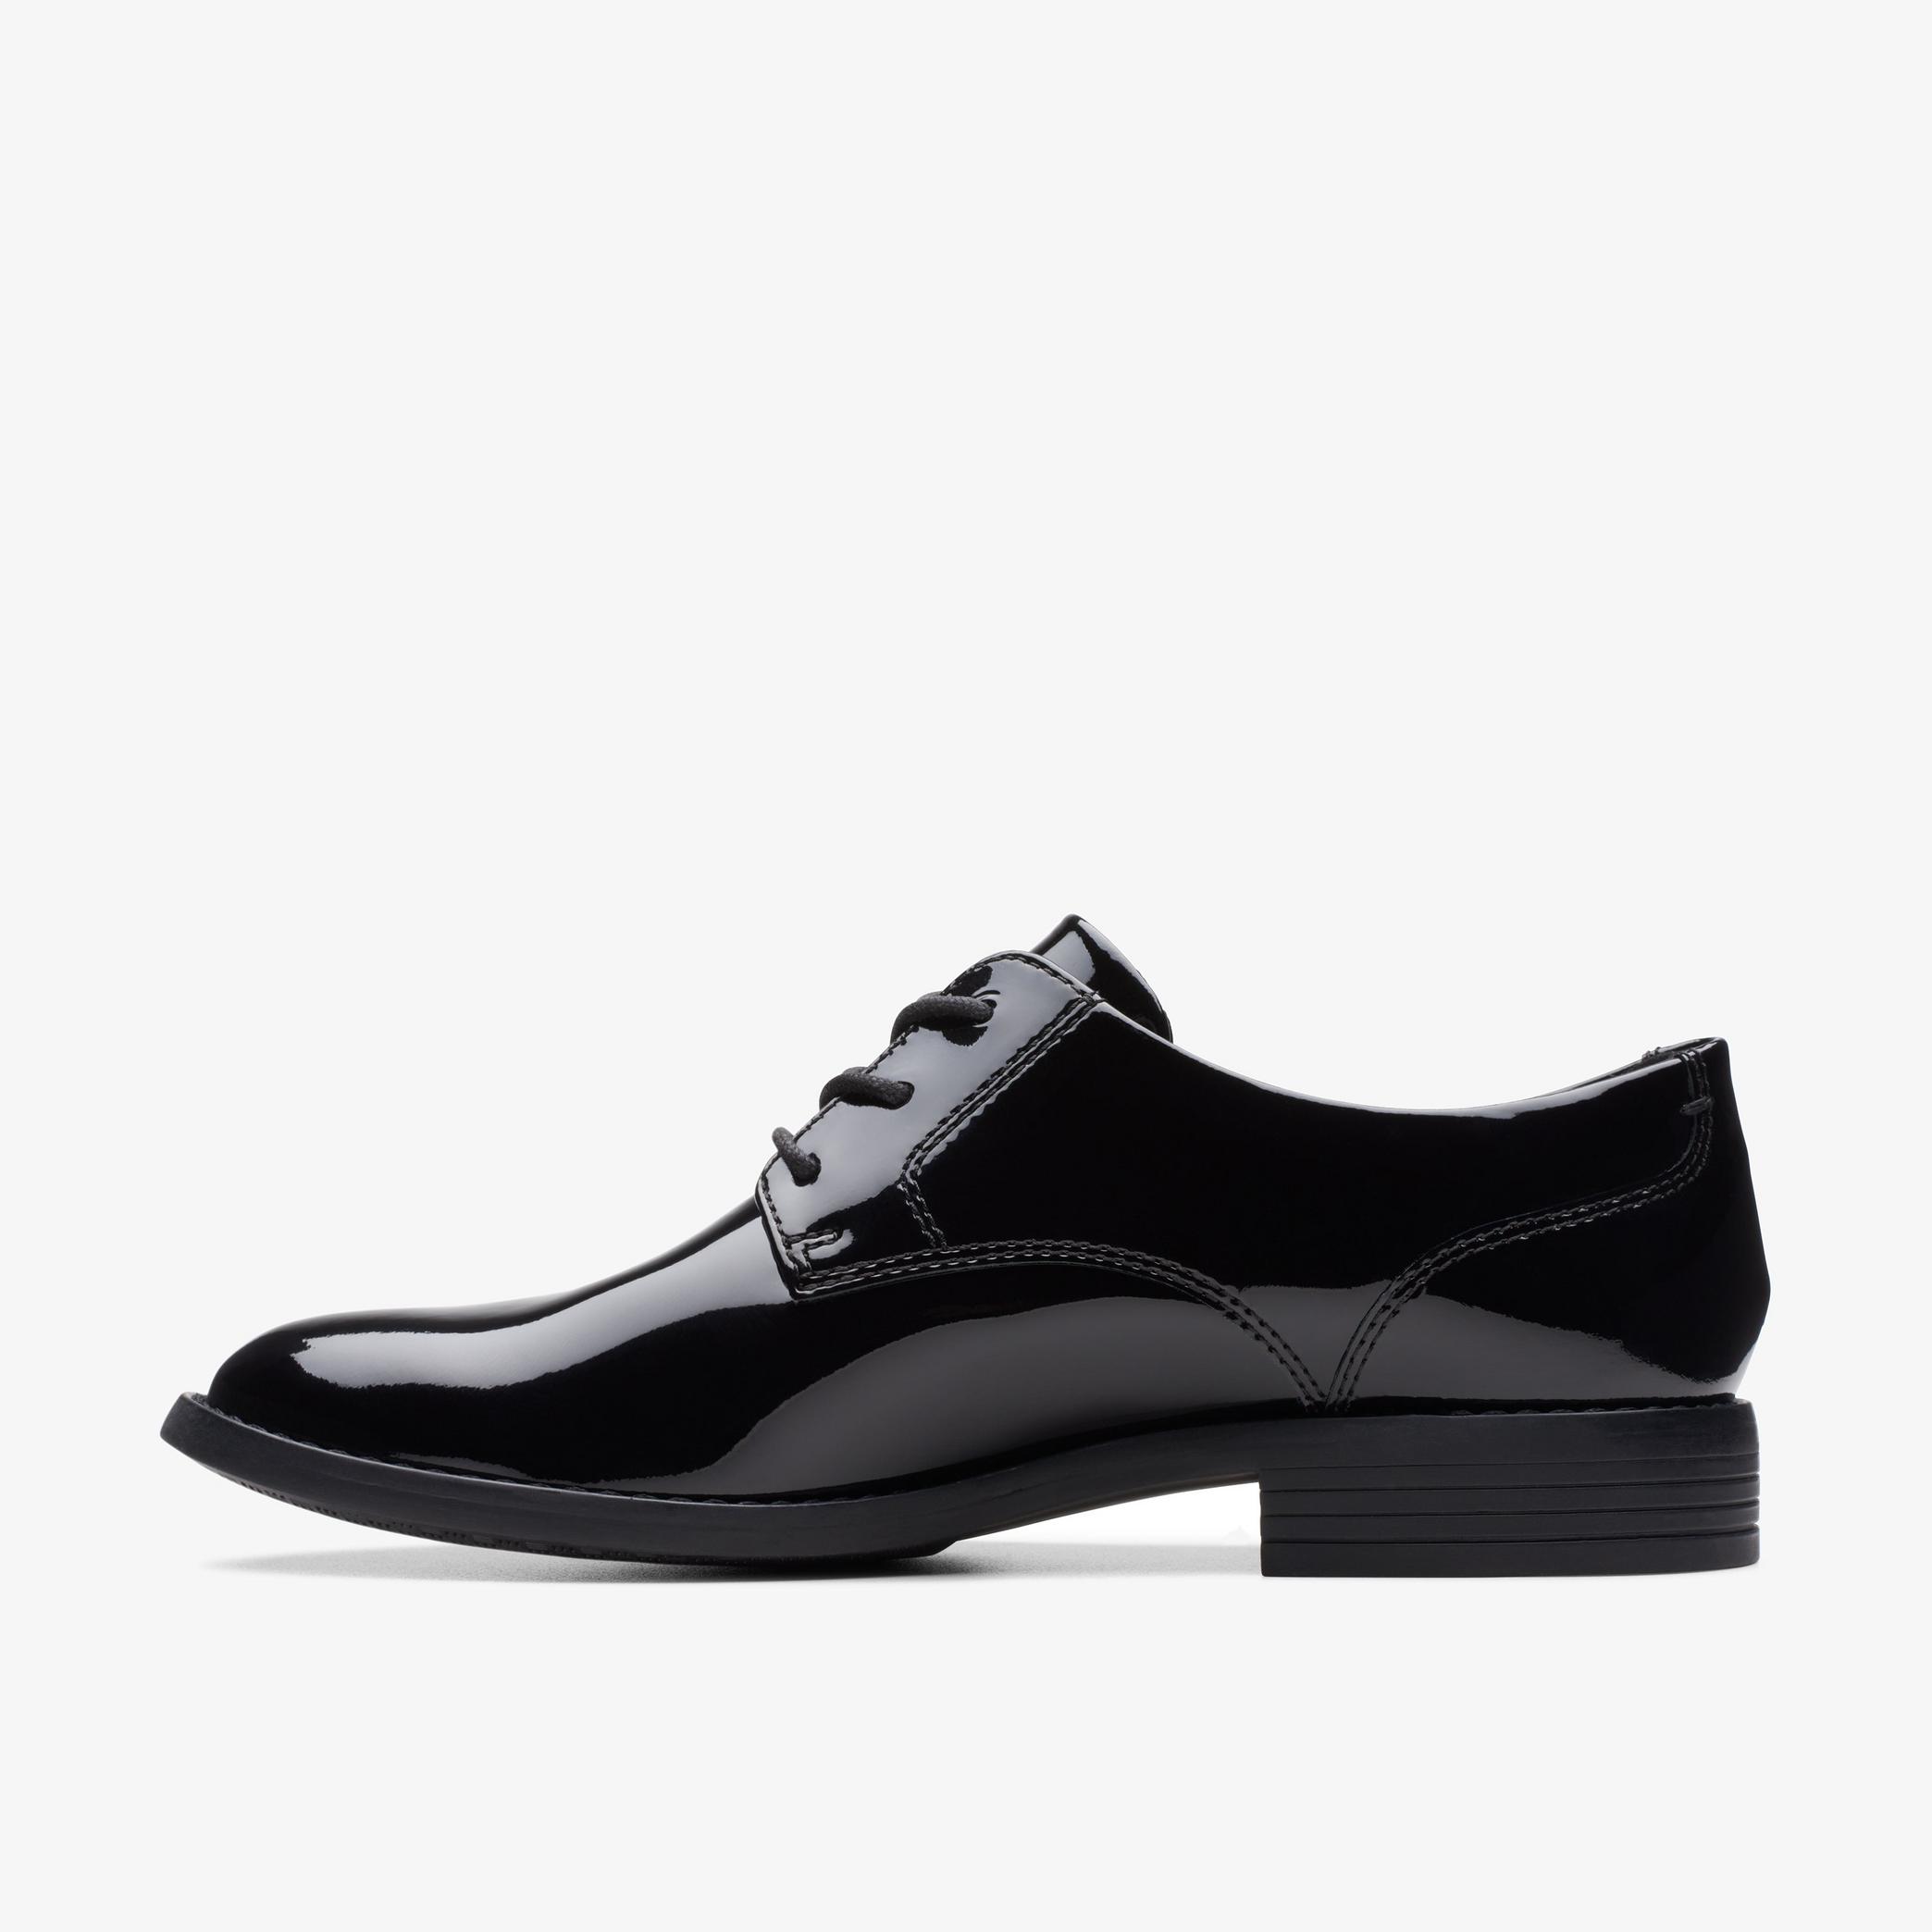 Womens Camzin Iris Black Patent Leather Derby Shoes | Clarks UK